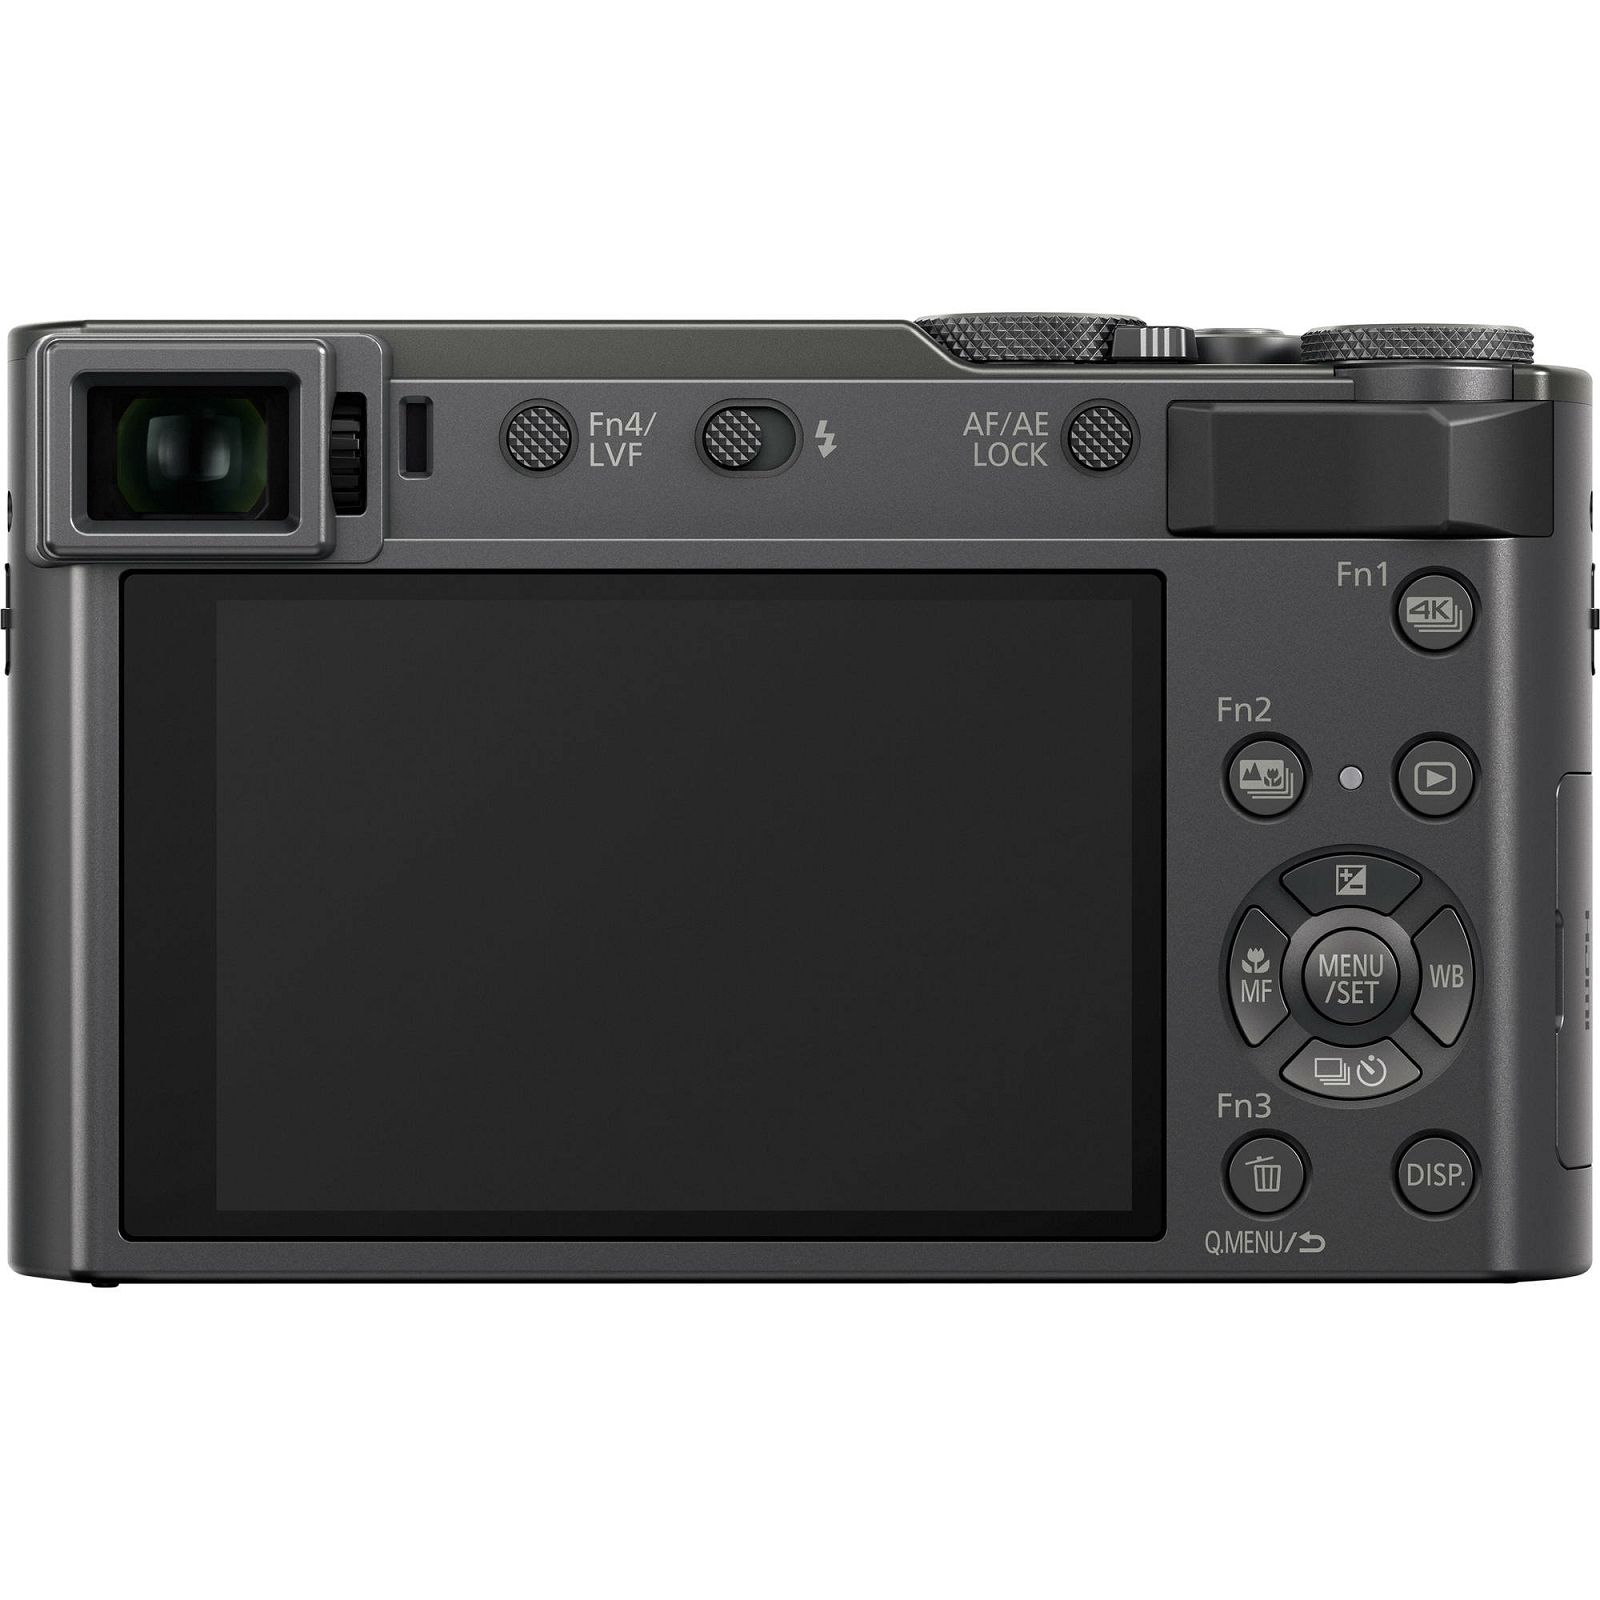 Panasonic Lumix DC-ZS200 Silver Digital Camera srebreni digitalni fotoaparat DC-TZ200 (DC-ZS200S)